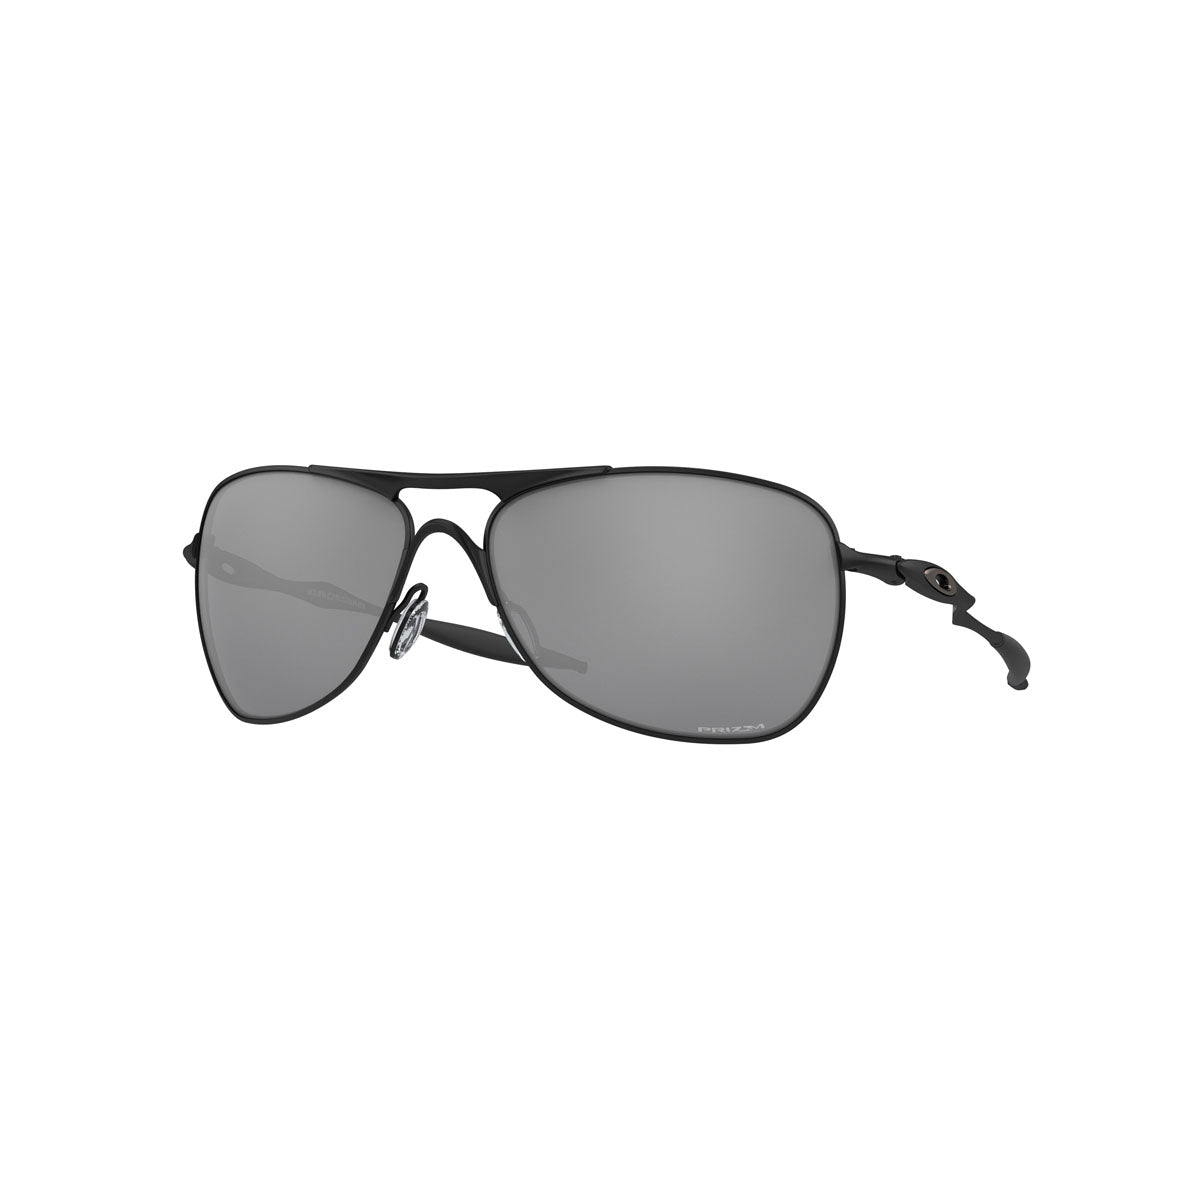 Oakley Crosshair Sunglasses